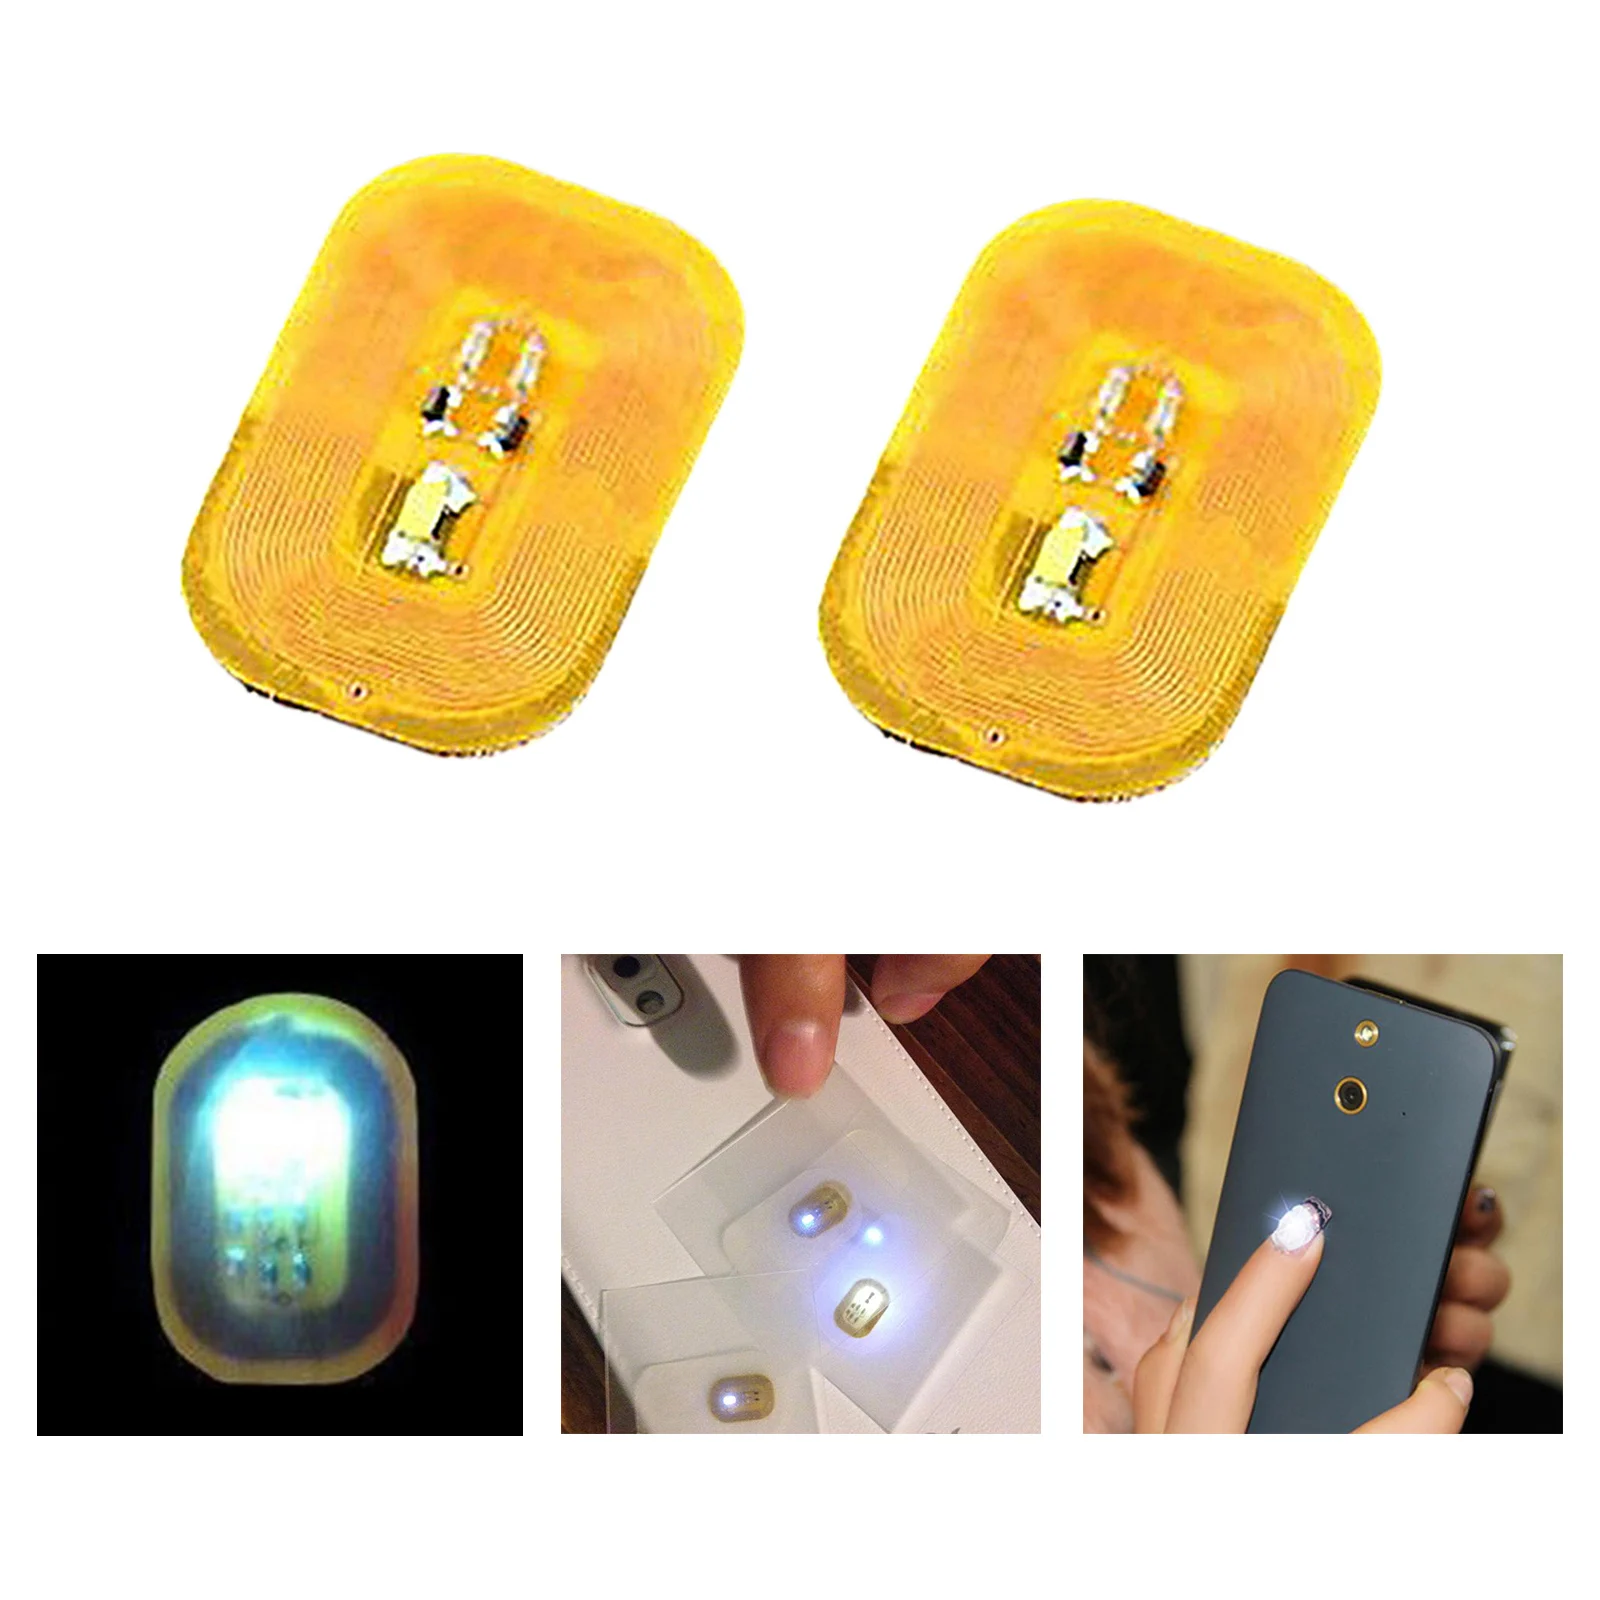 2 Pieces Luck NFC Chip Nail Art Sticker Lamp Scintillation Decor Phone